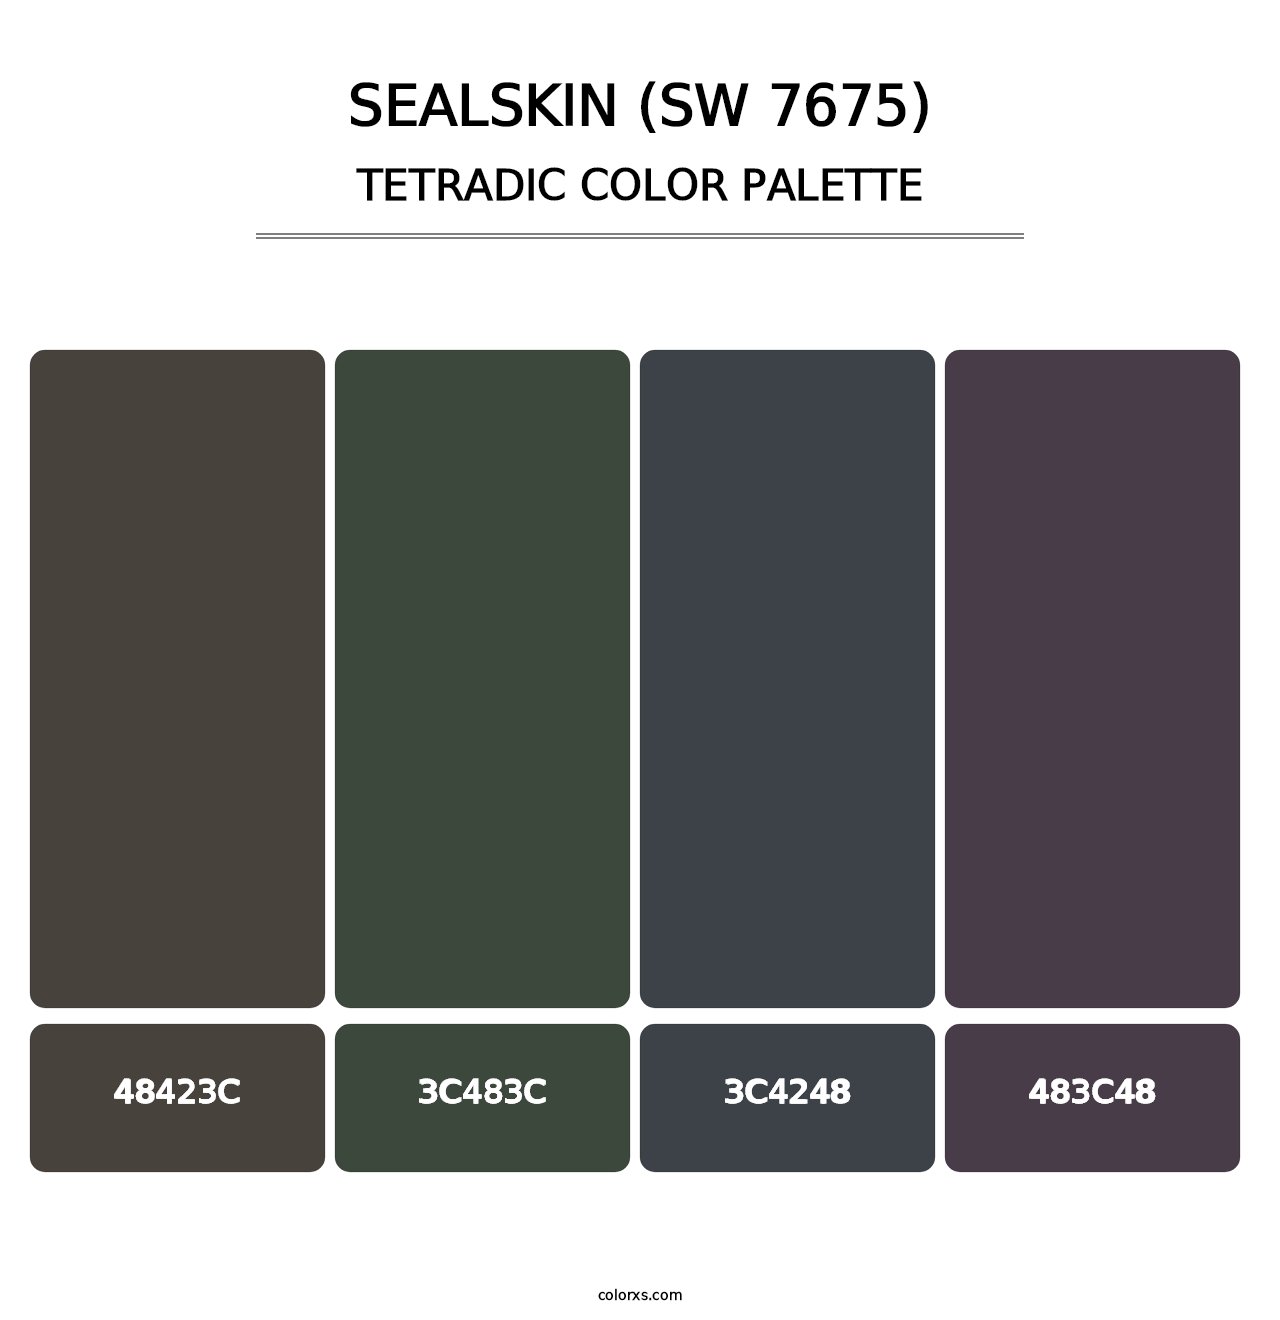 Sealskin (SW 7675) - Tetradic Color Palette